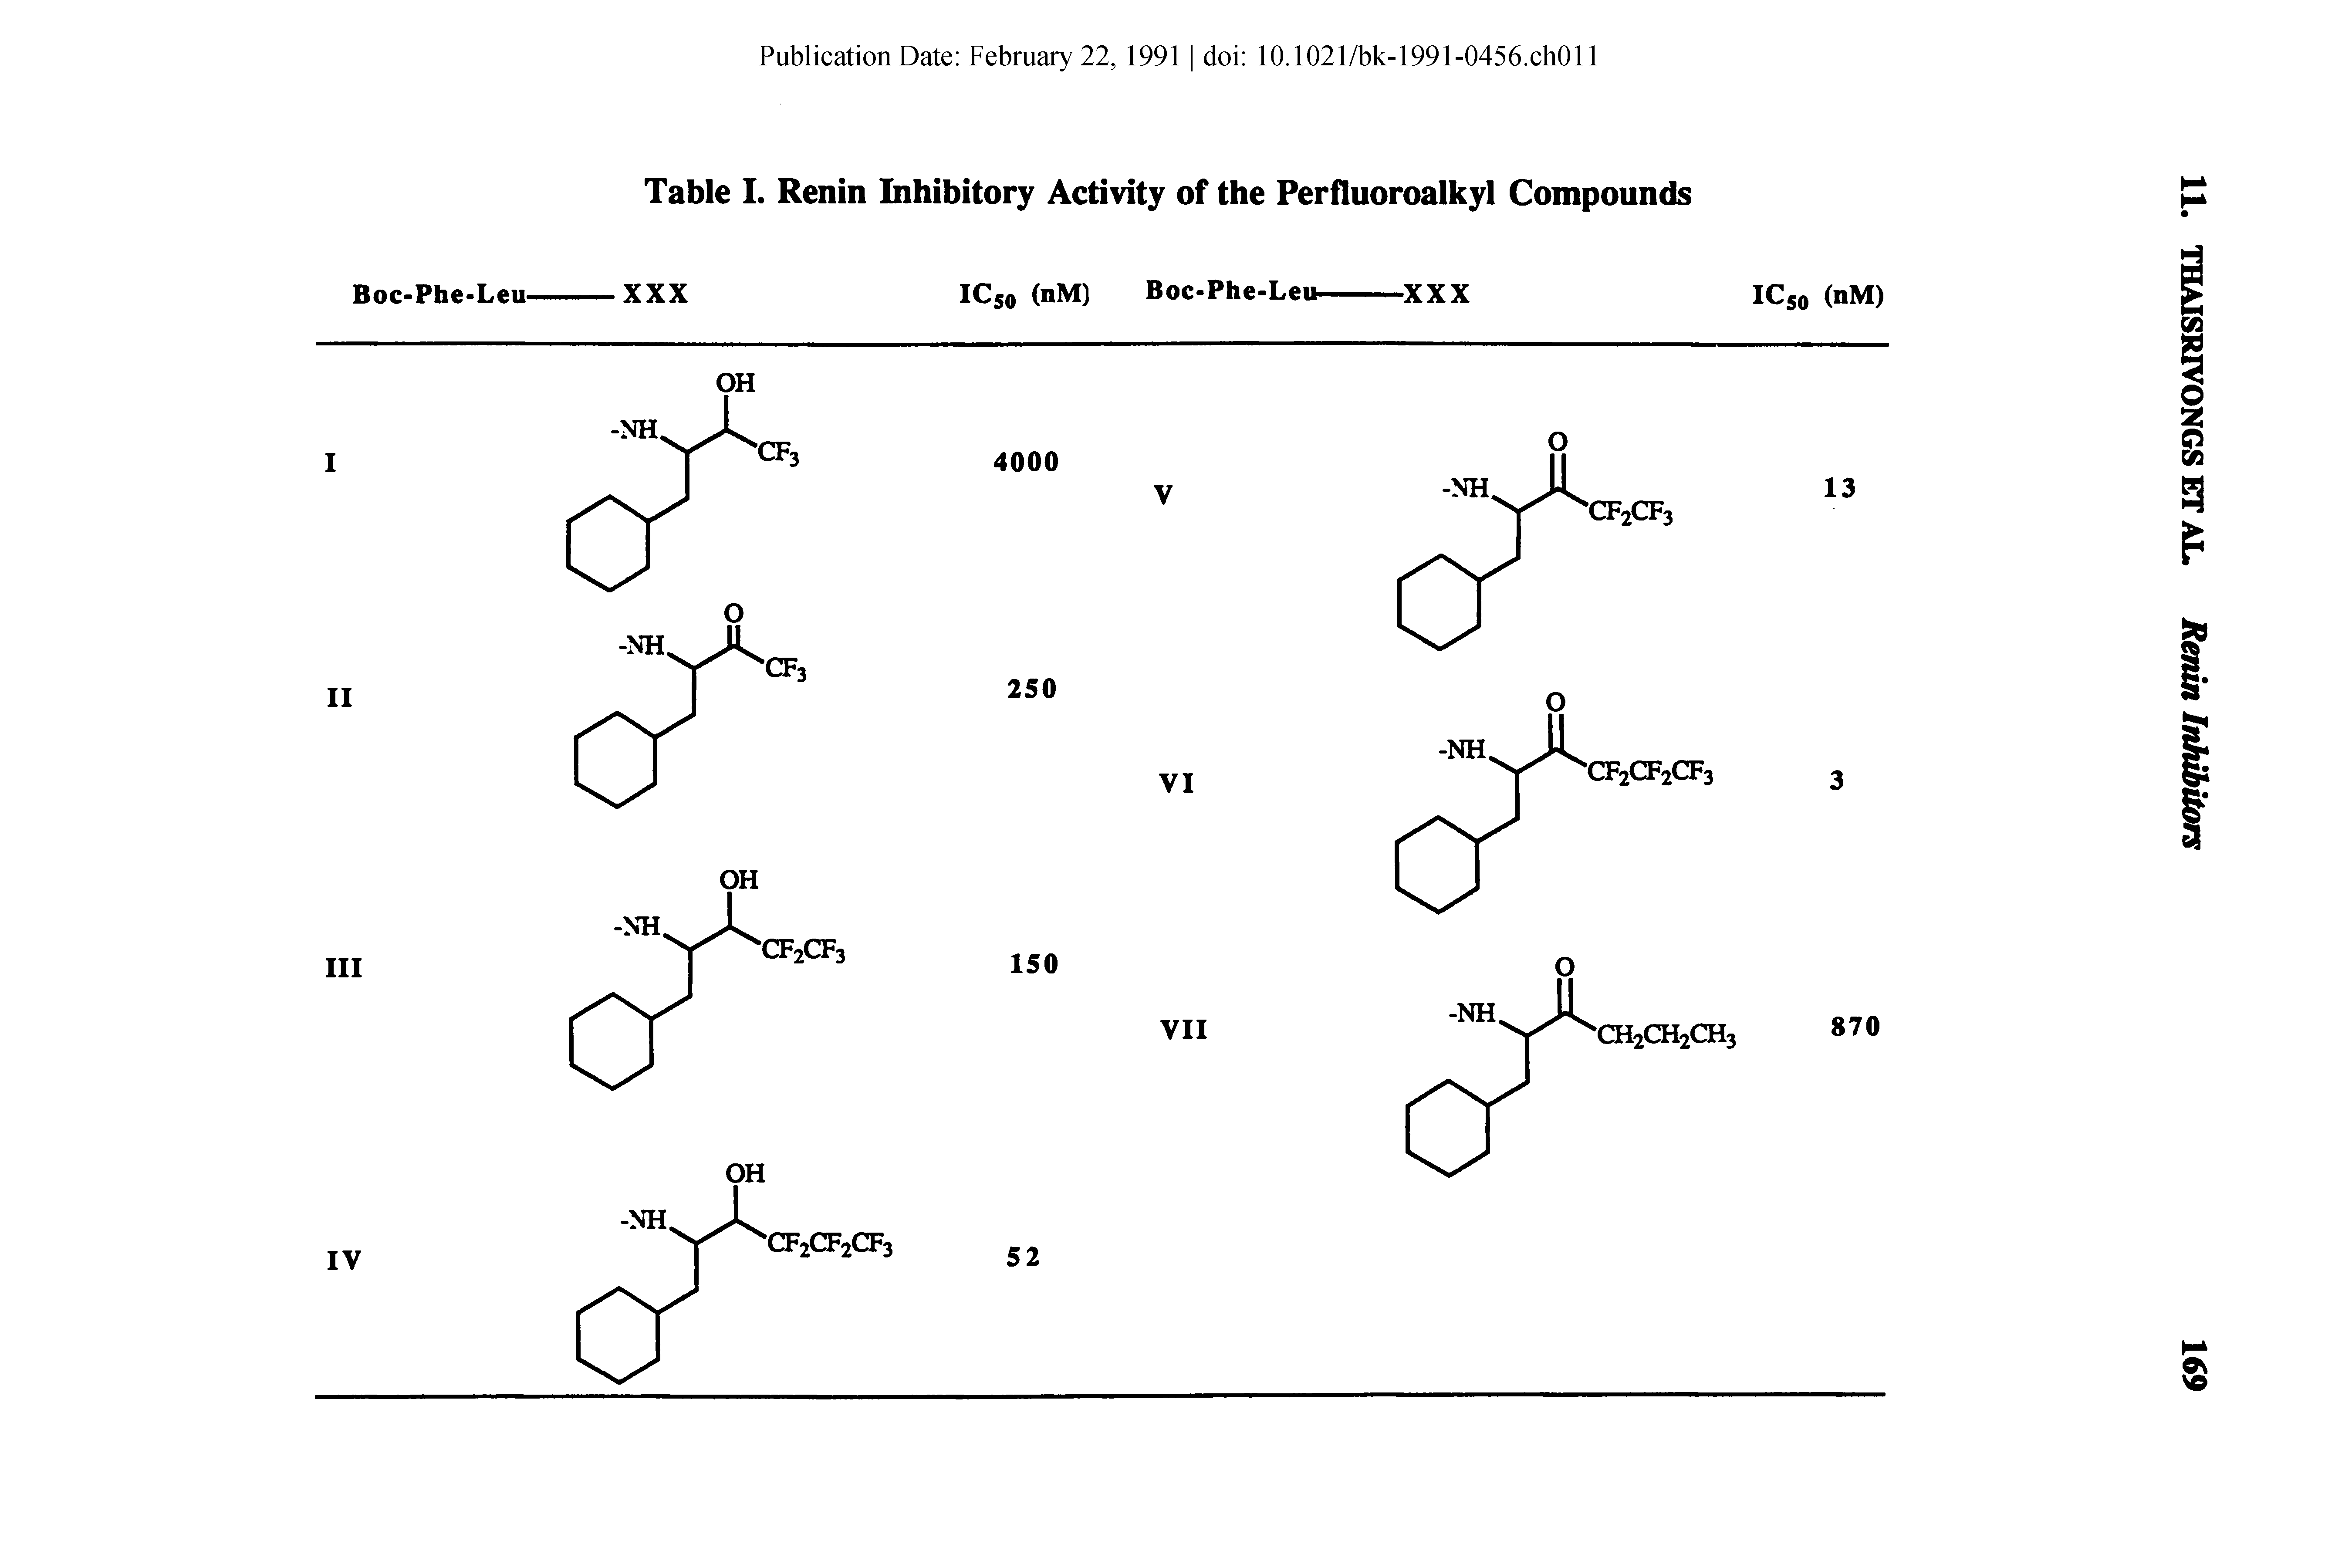 Table I. Renin Inhibitory Activity of the Perfluoroalkyl Compounds...